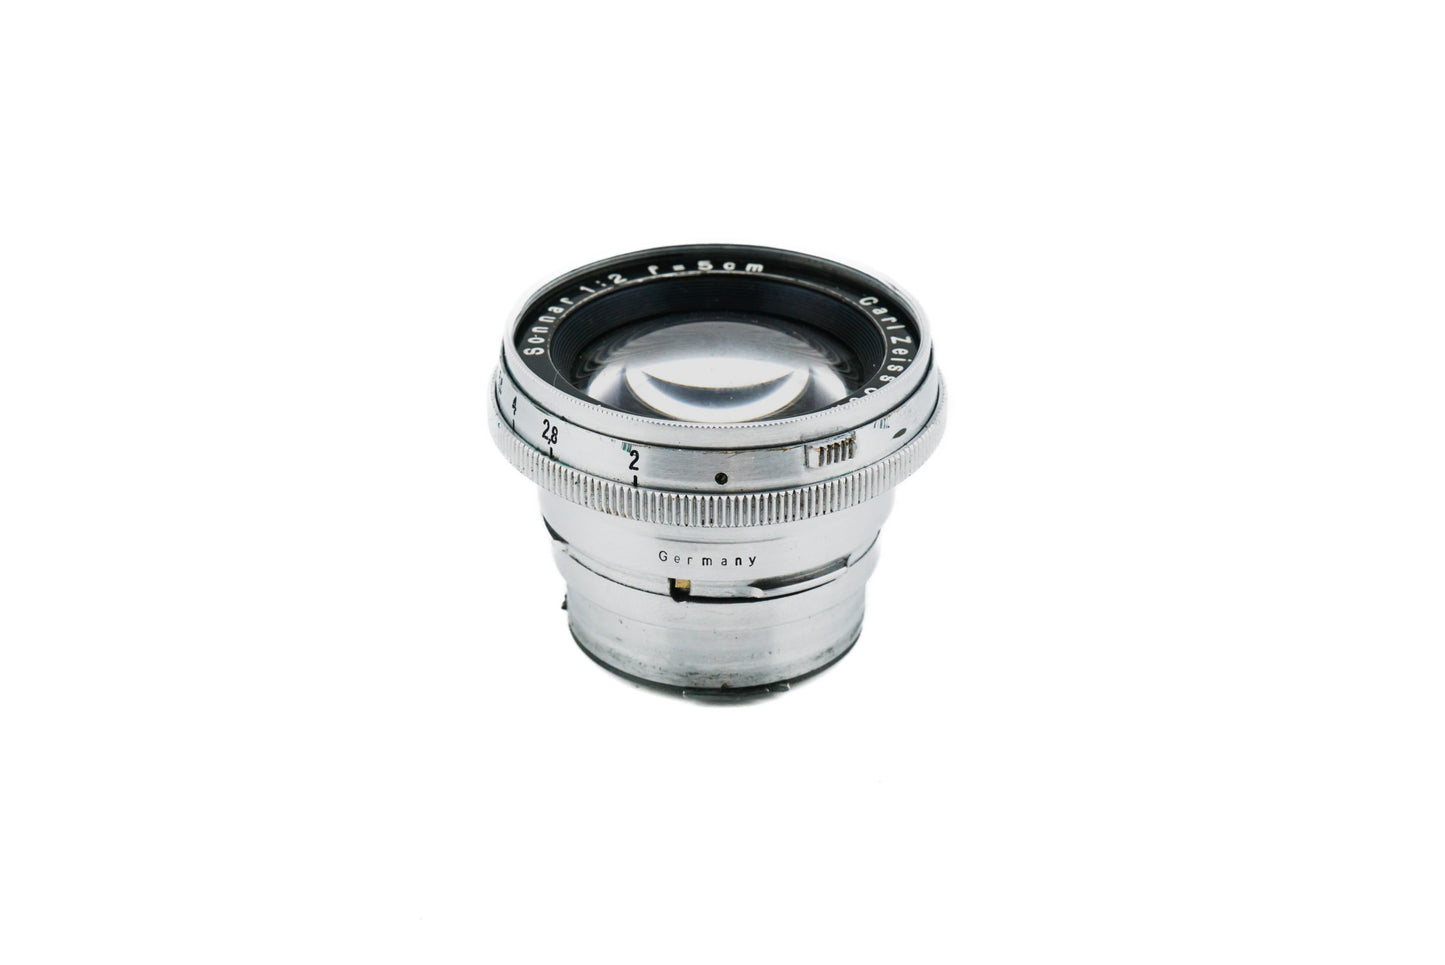 Carl Zeiss 50mm f2 Sonnar Jena - Lens